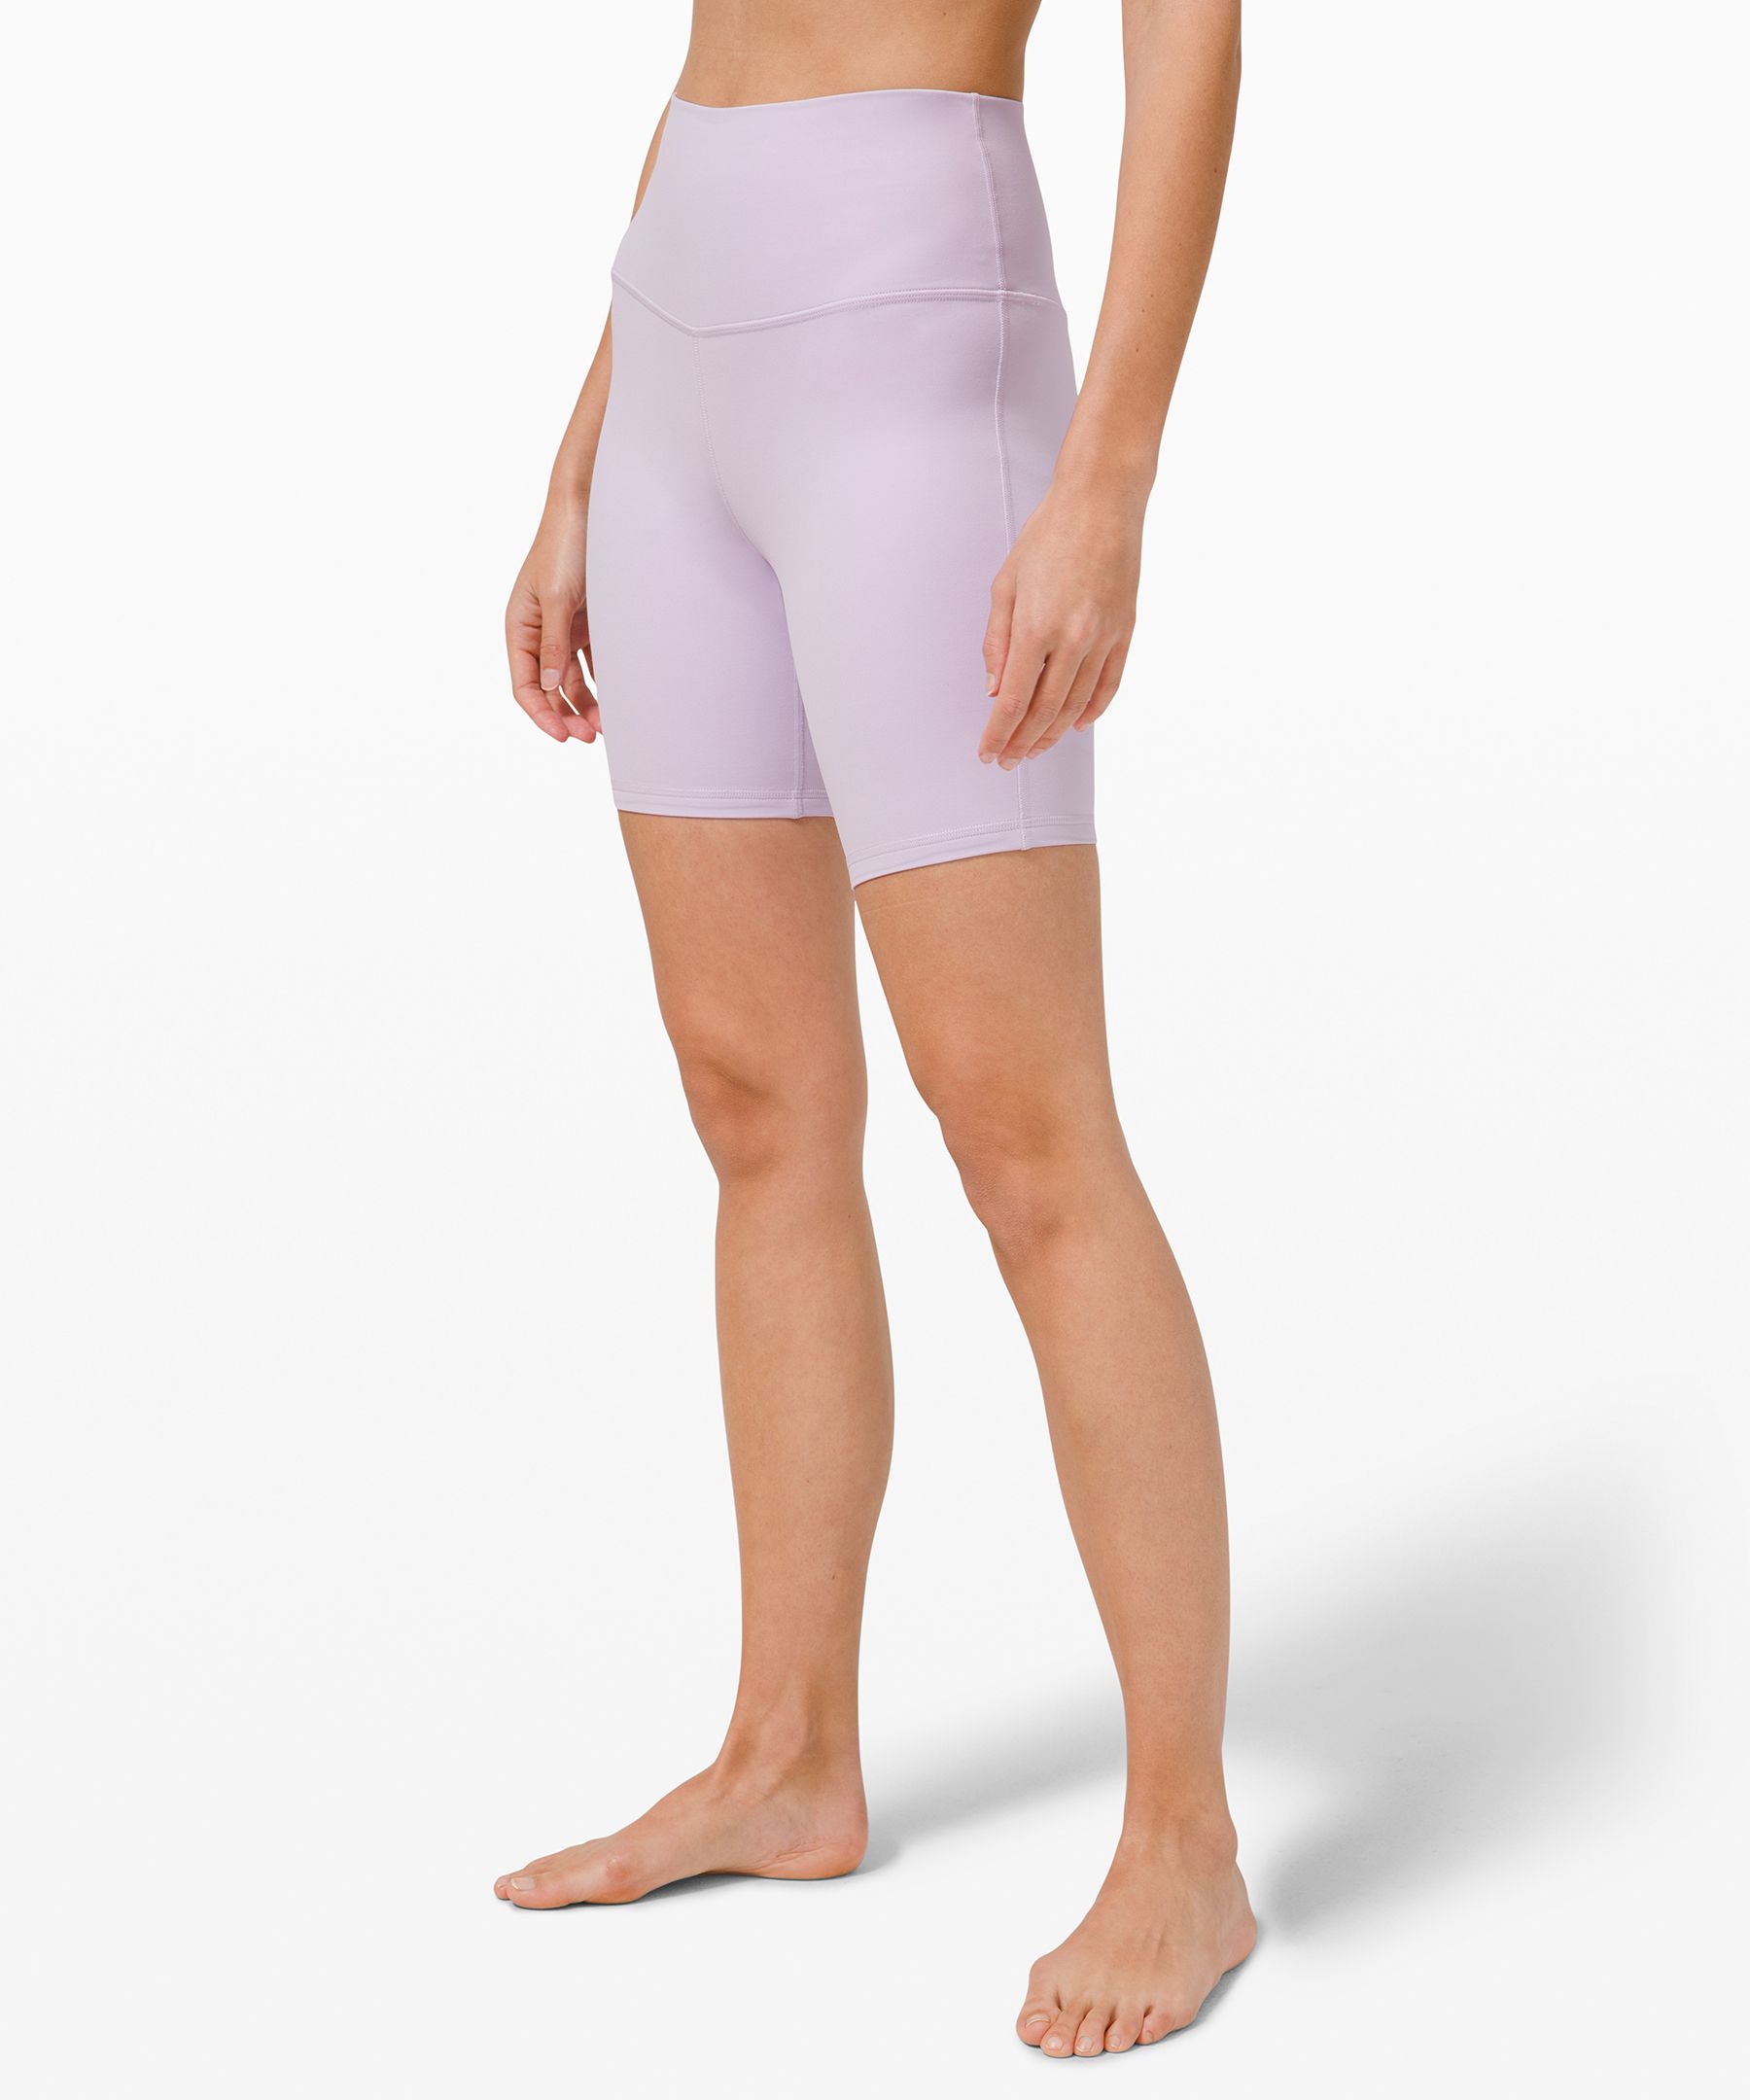 lulu align shorts